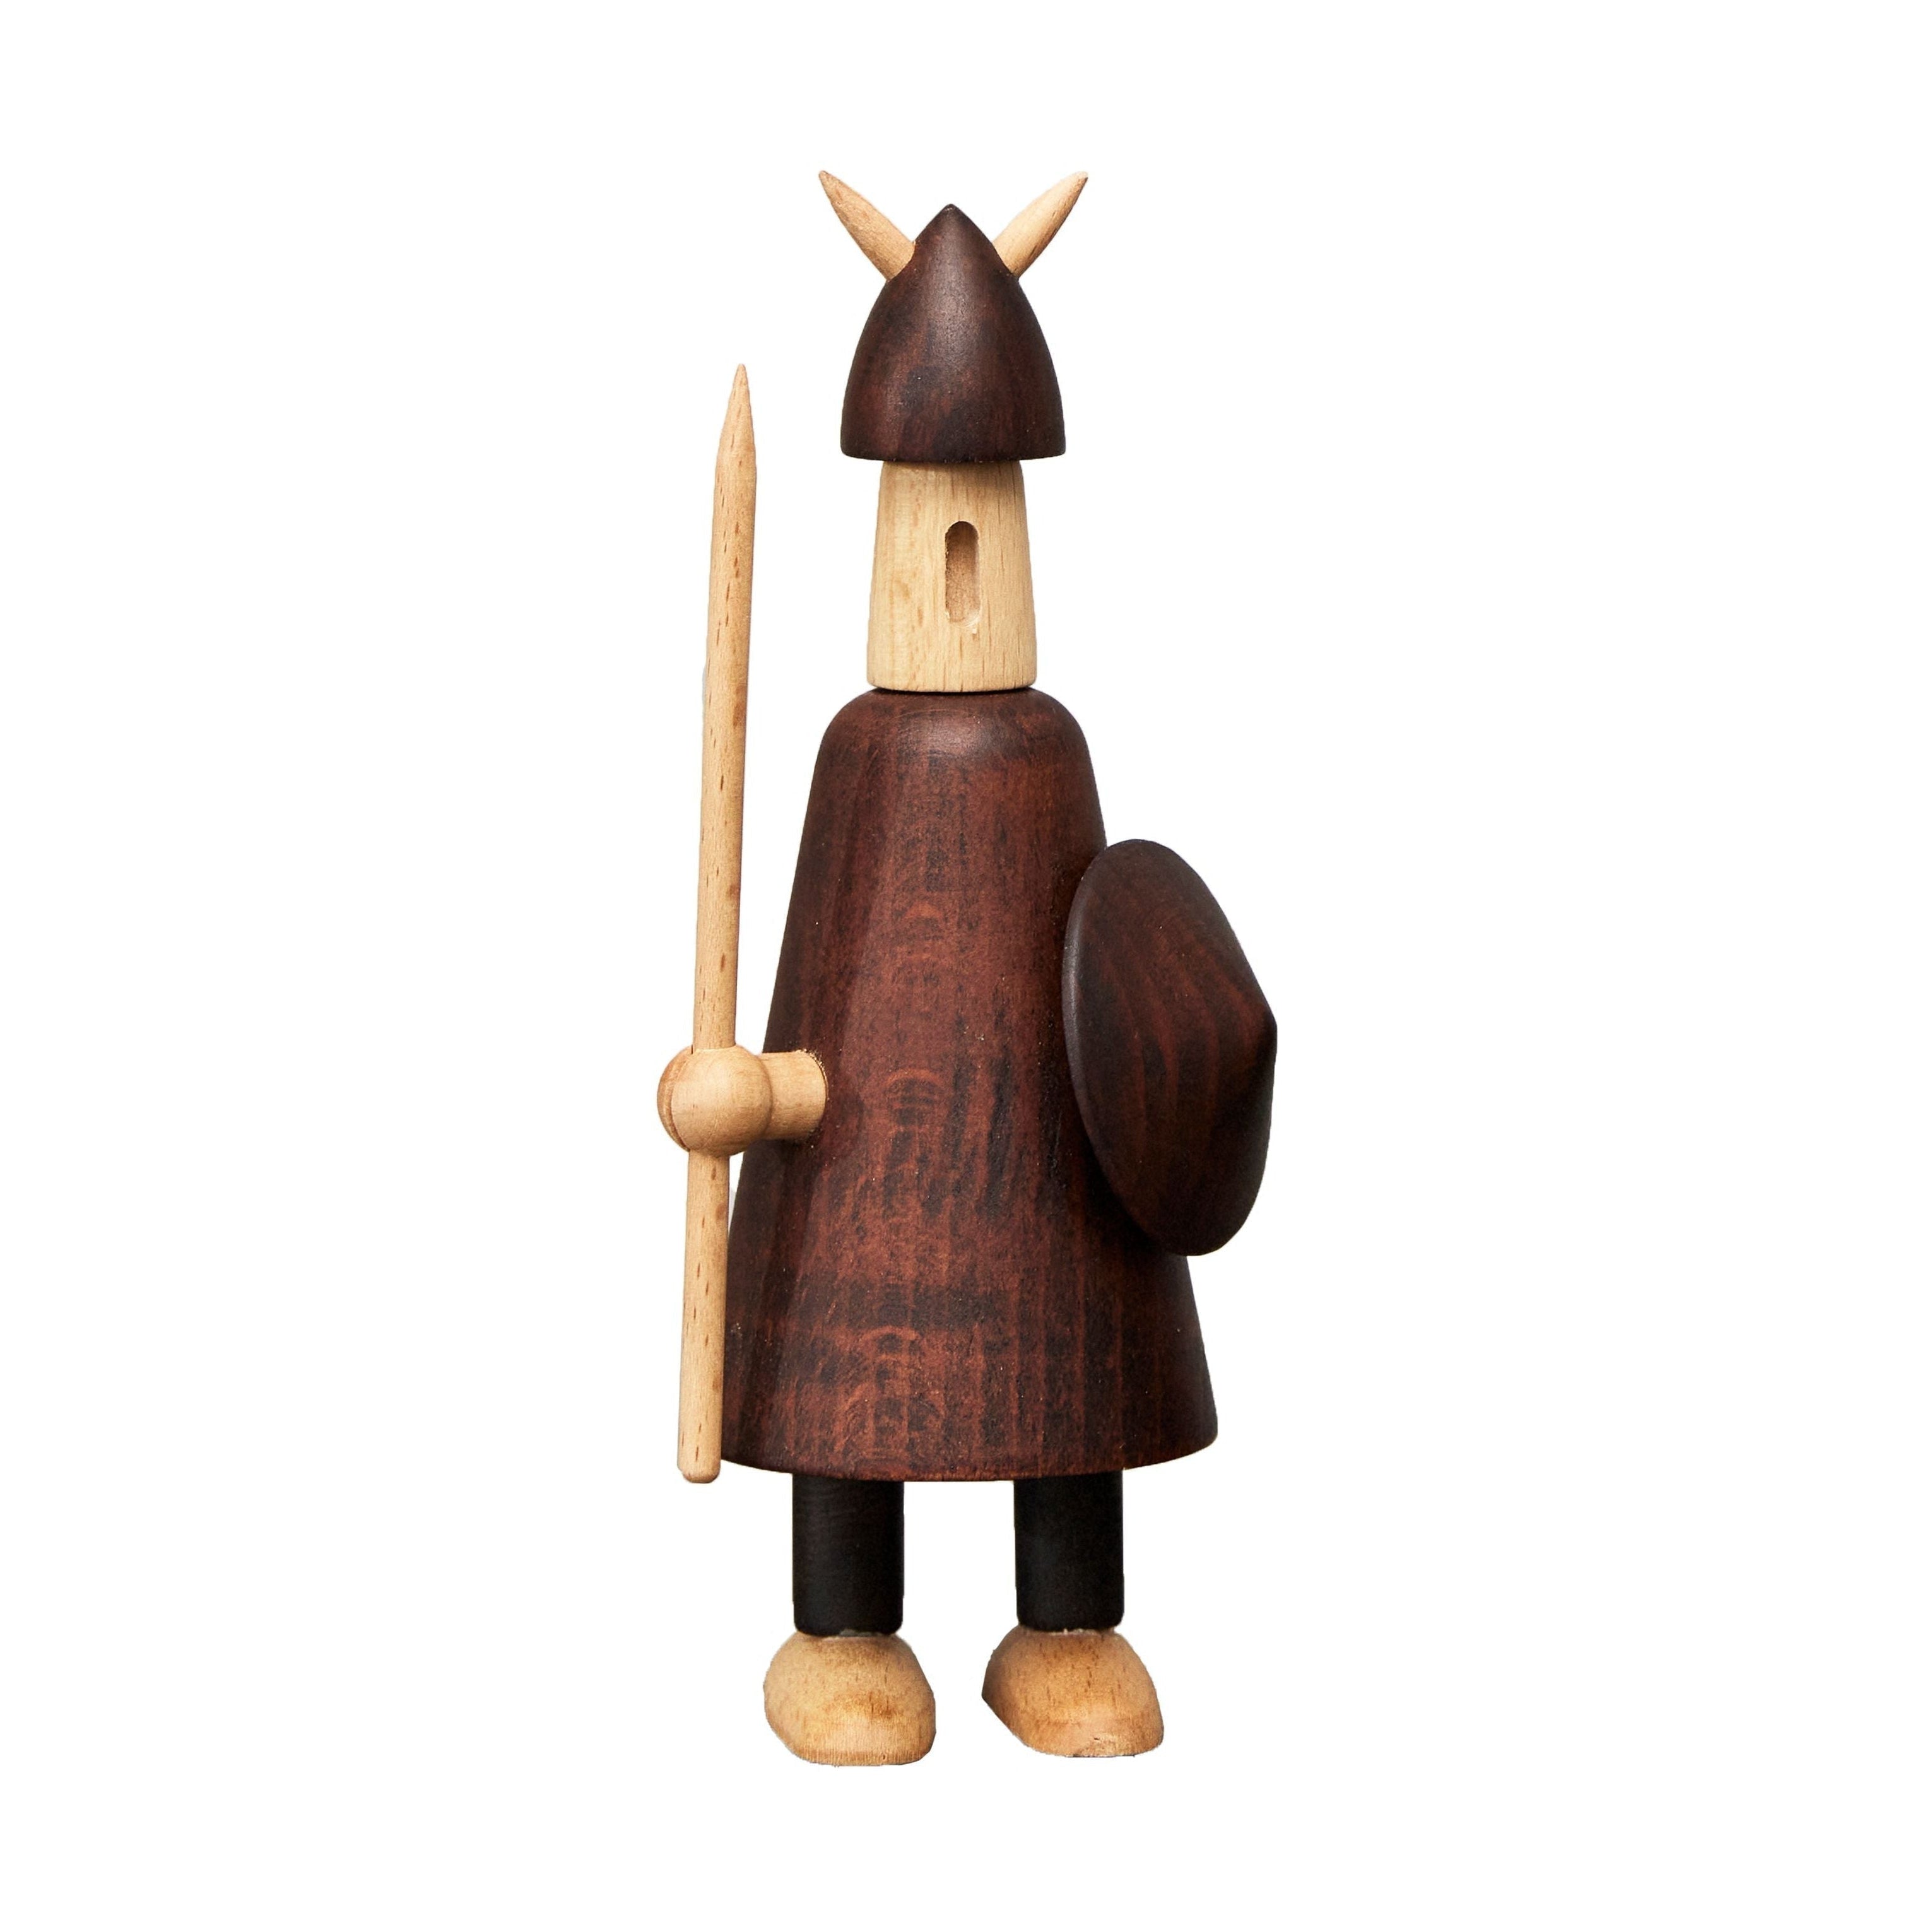 Andersen Furniture Les Vikings de la figure en bois du Danemark, grand